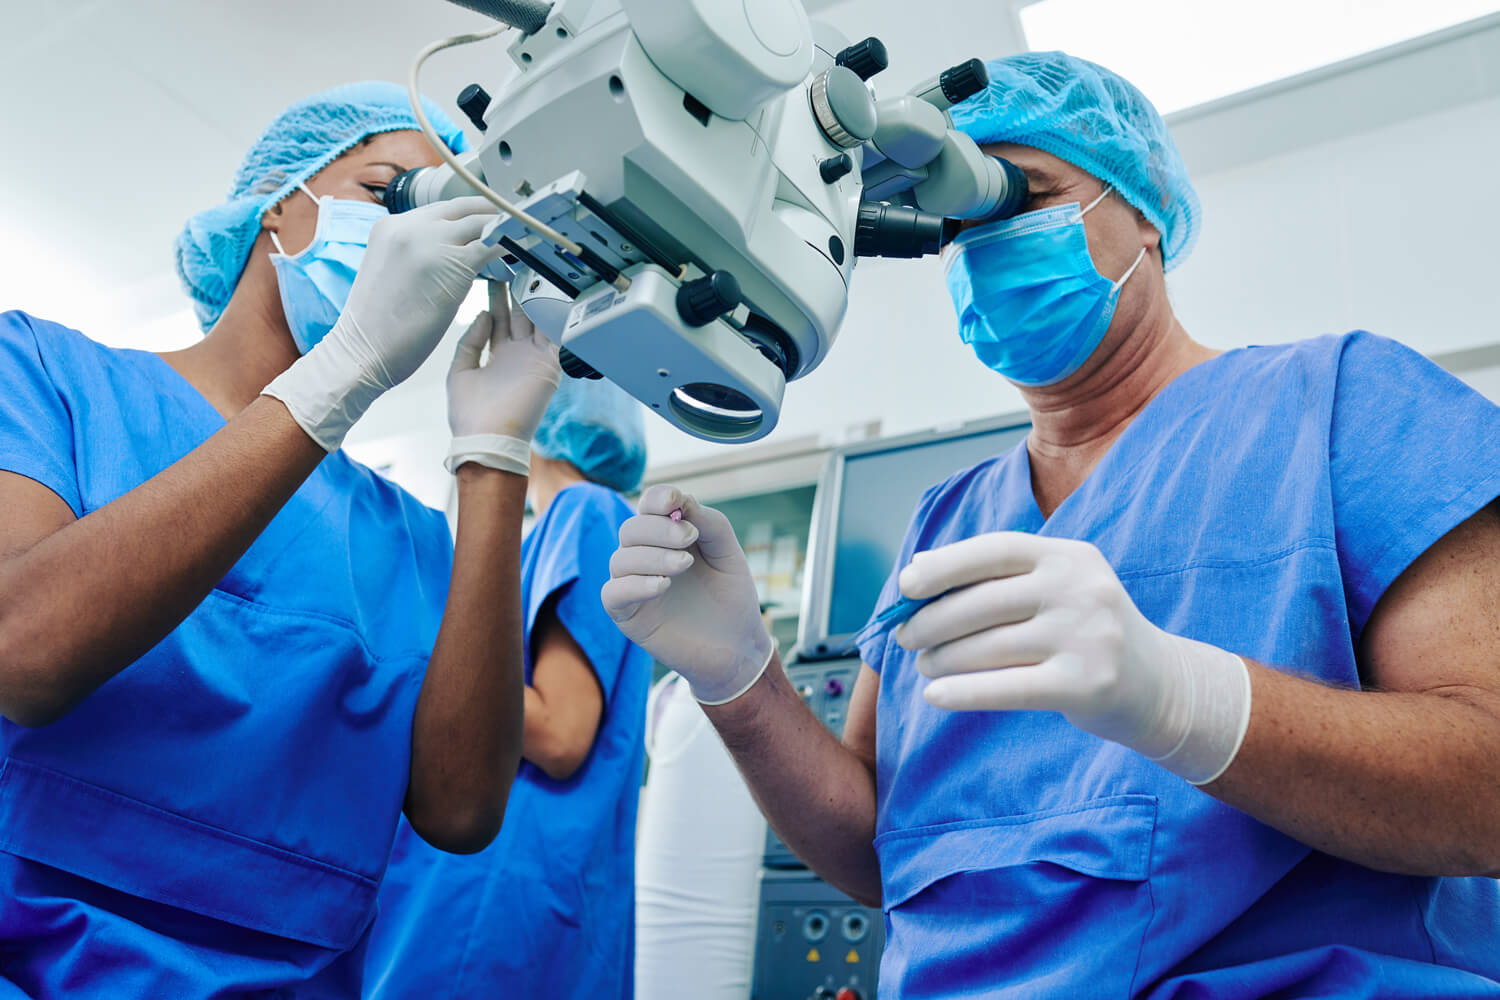 Eye doctors in lab gown